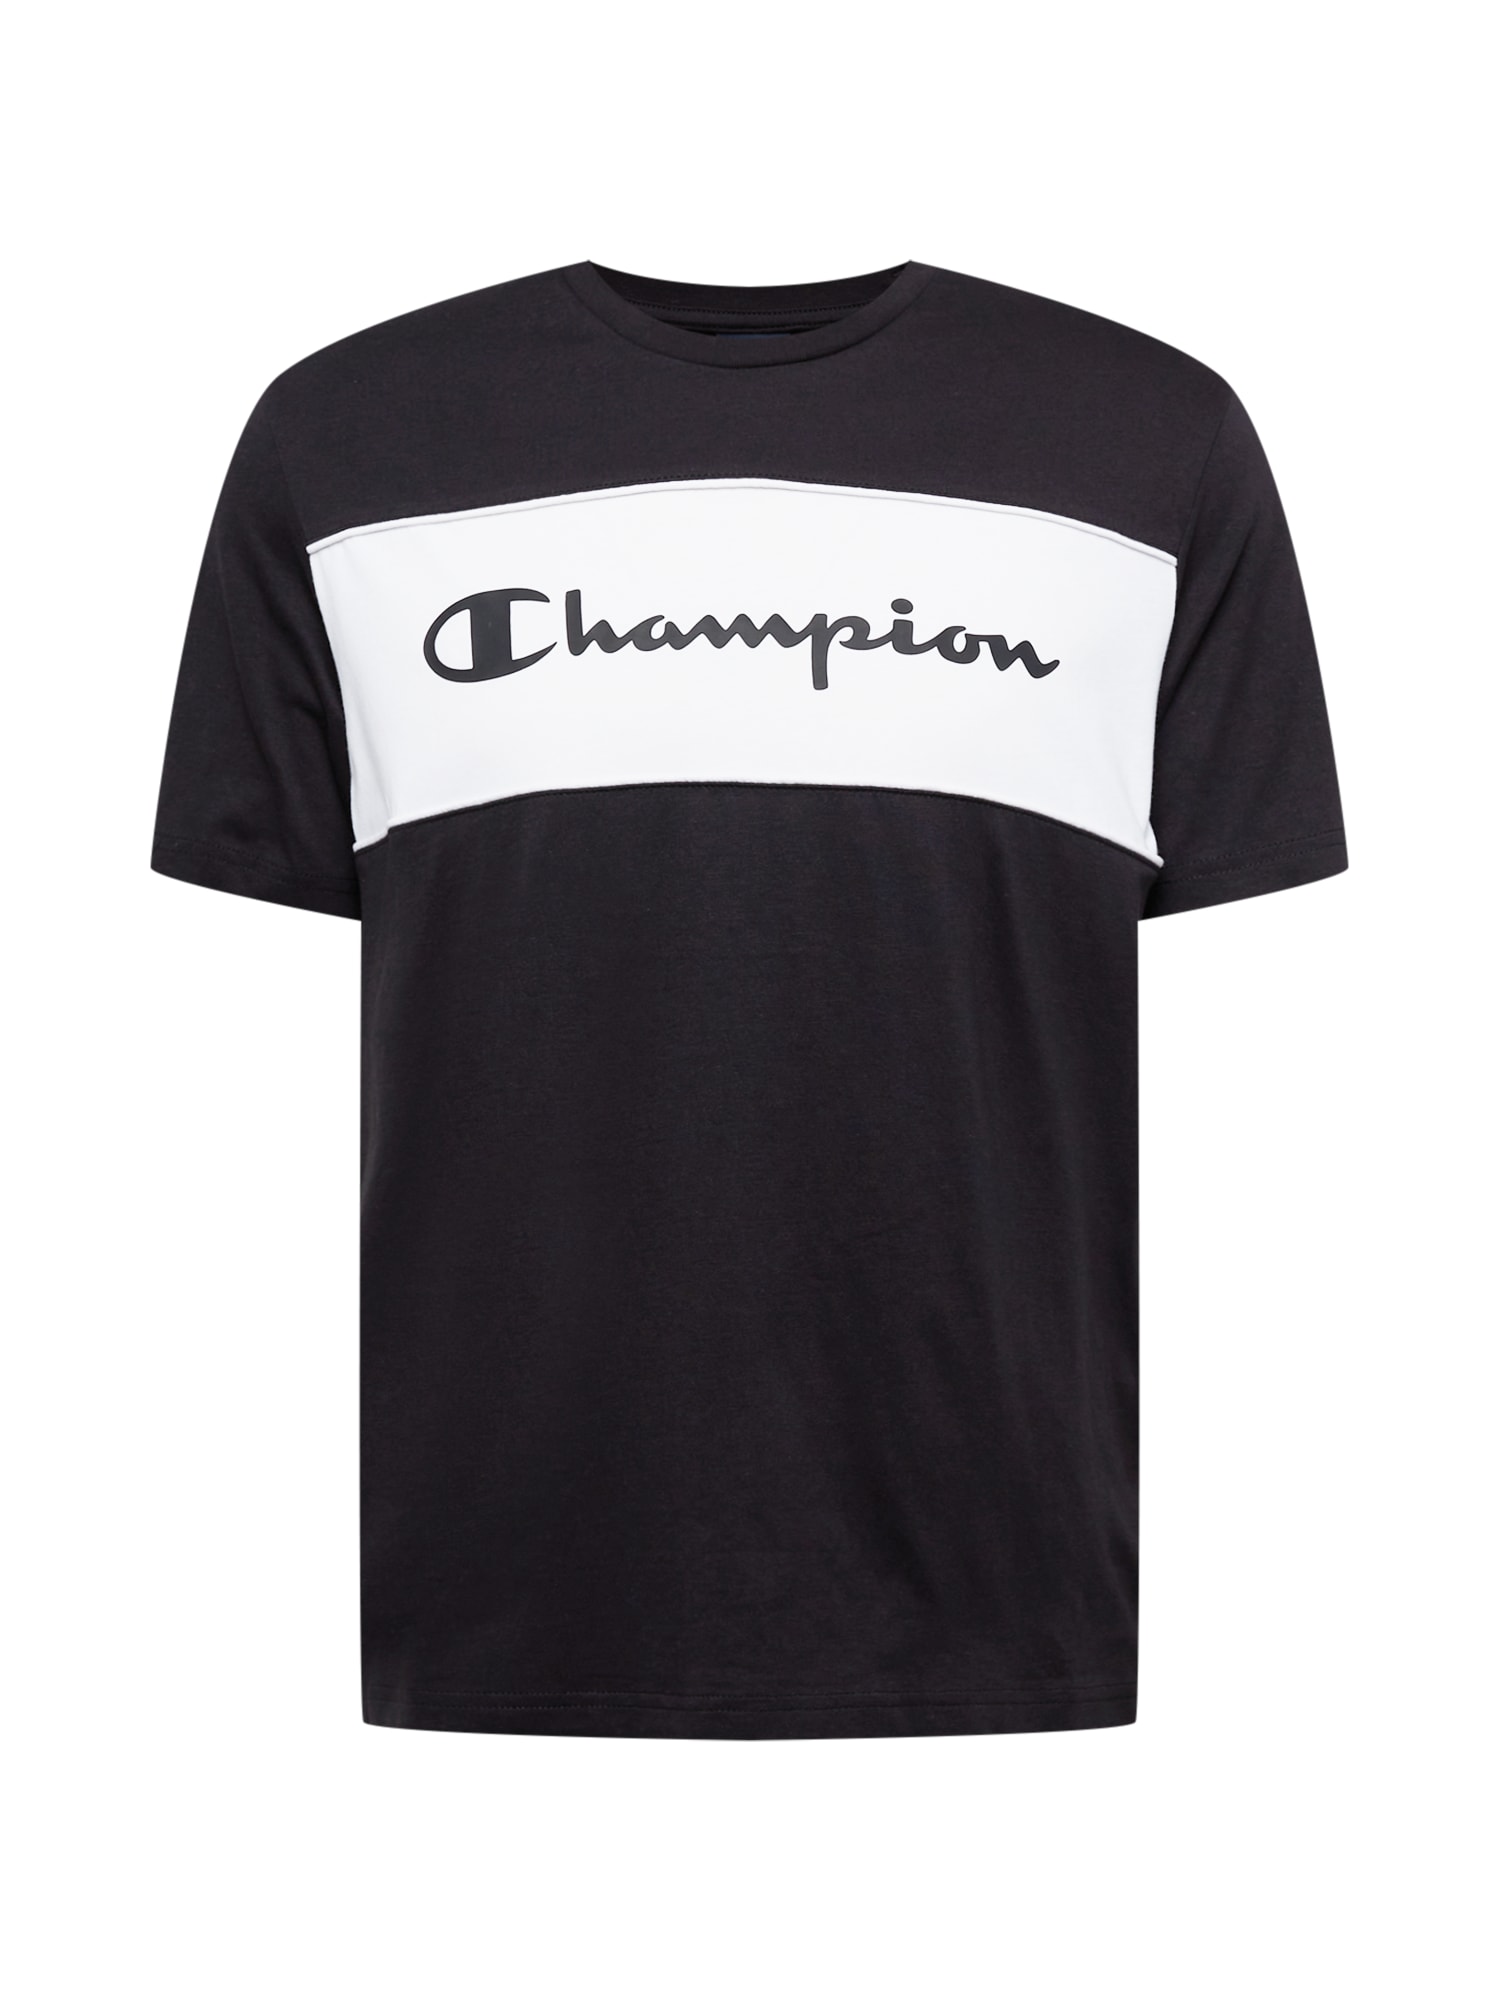 Champion Authentic Athletic Apparel T-Shirt schwarz / wei